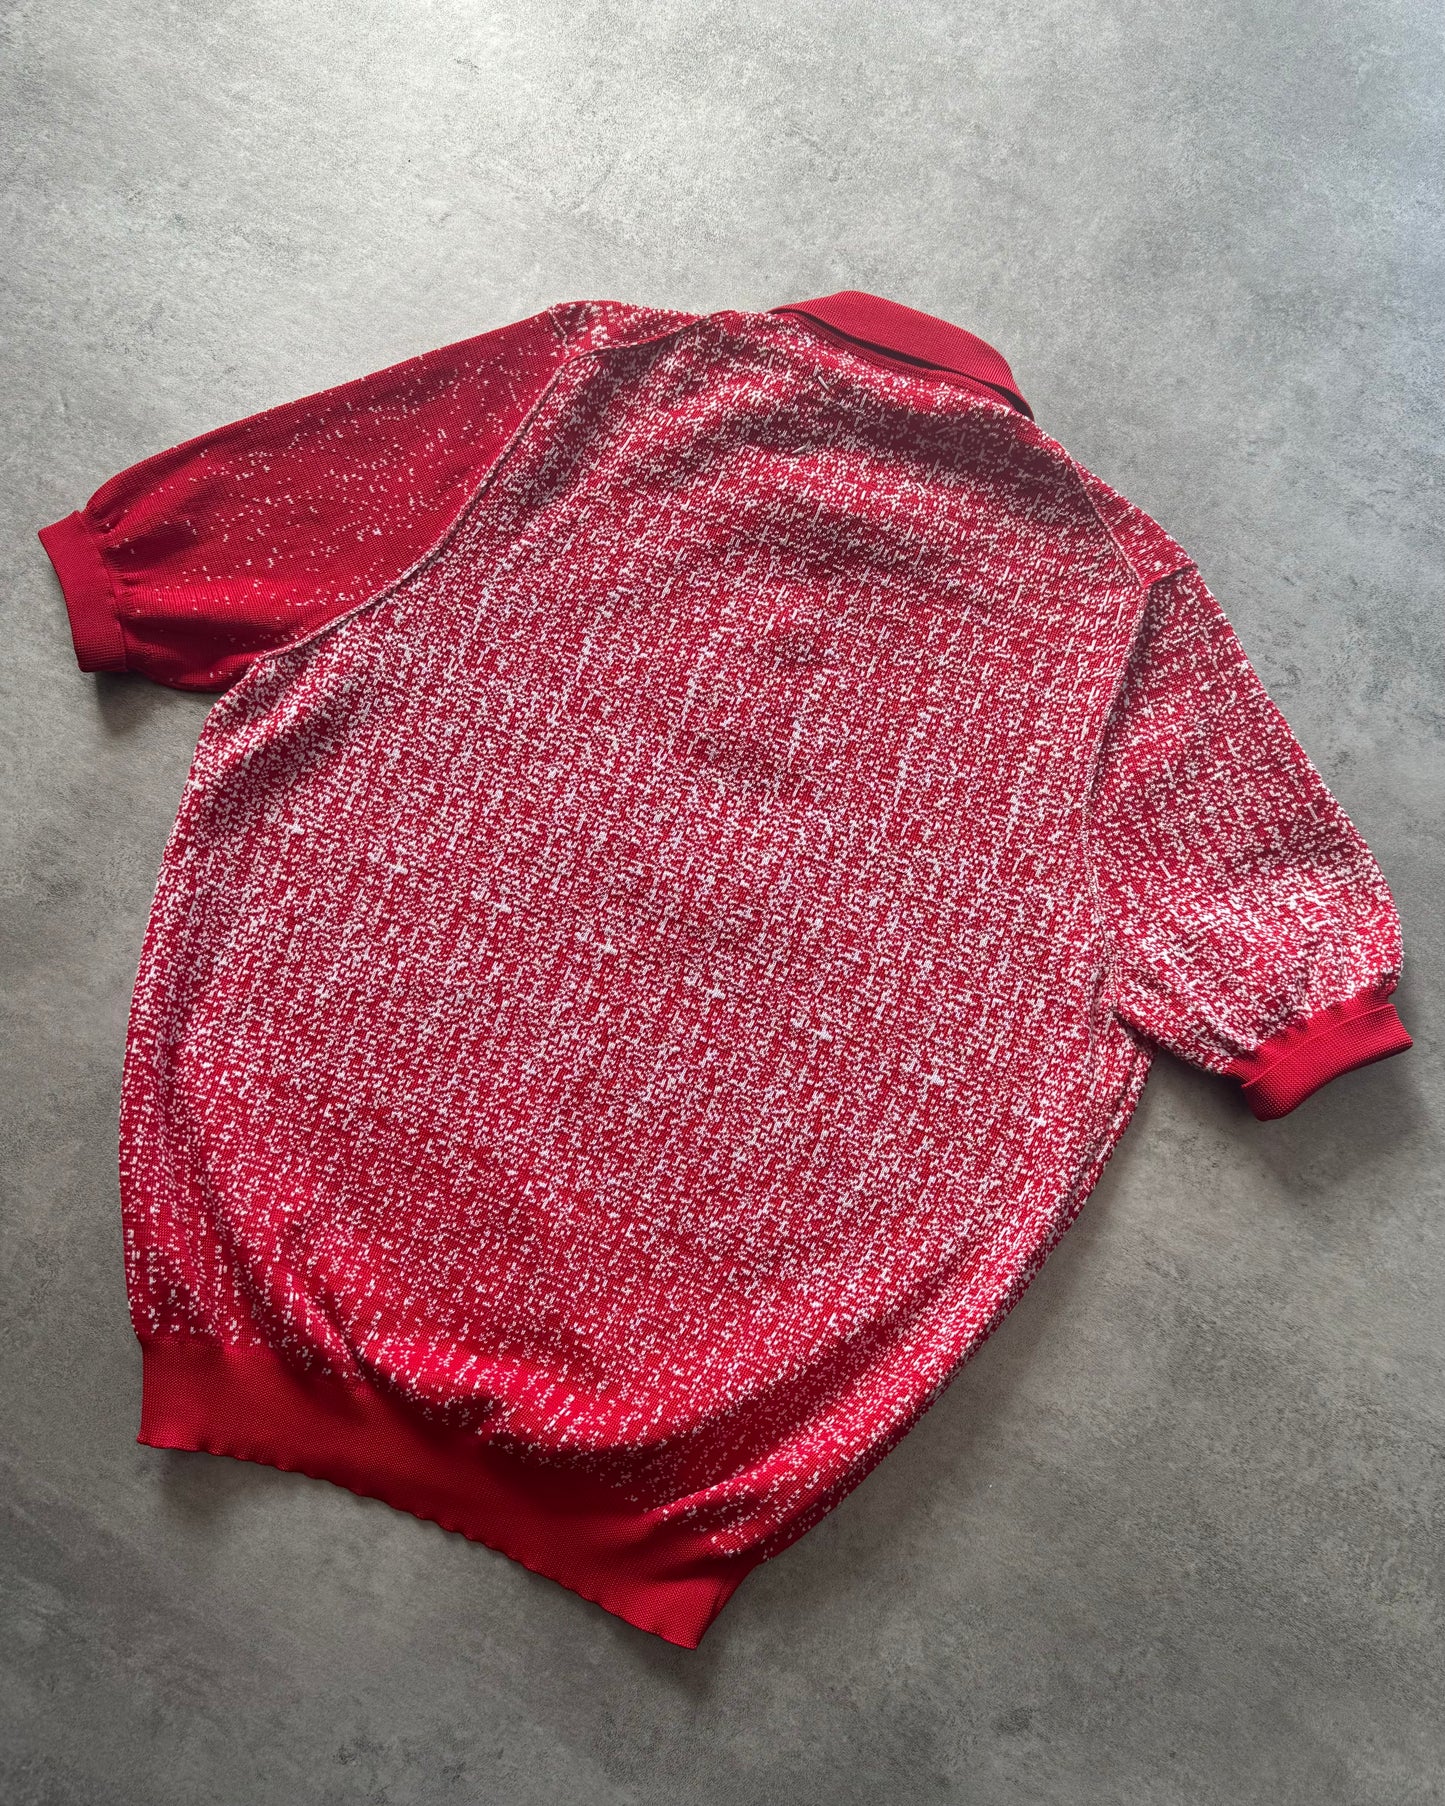 SS2017 Maison Margiela Pixelized Red Human Polo Shirt (S) - 6